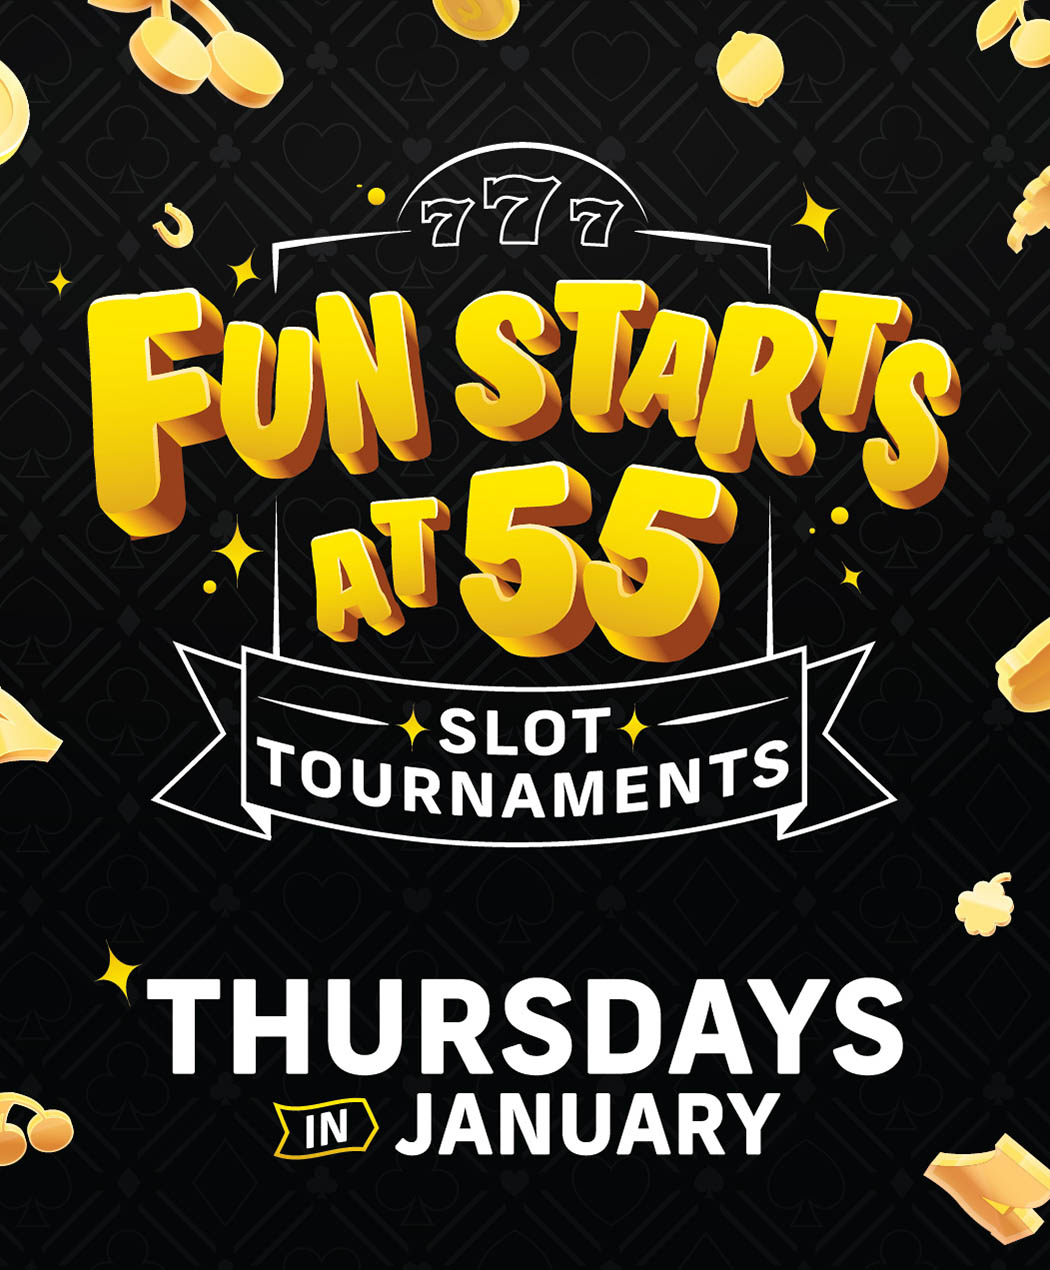 Fun Starts at 55 Slot Tournament